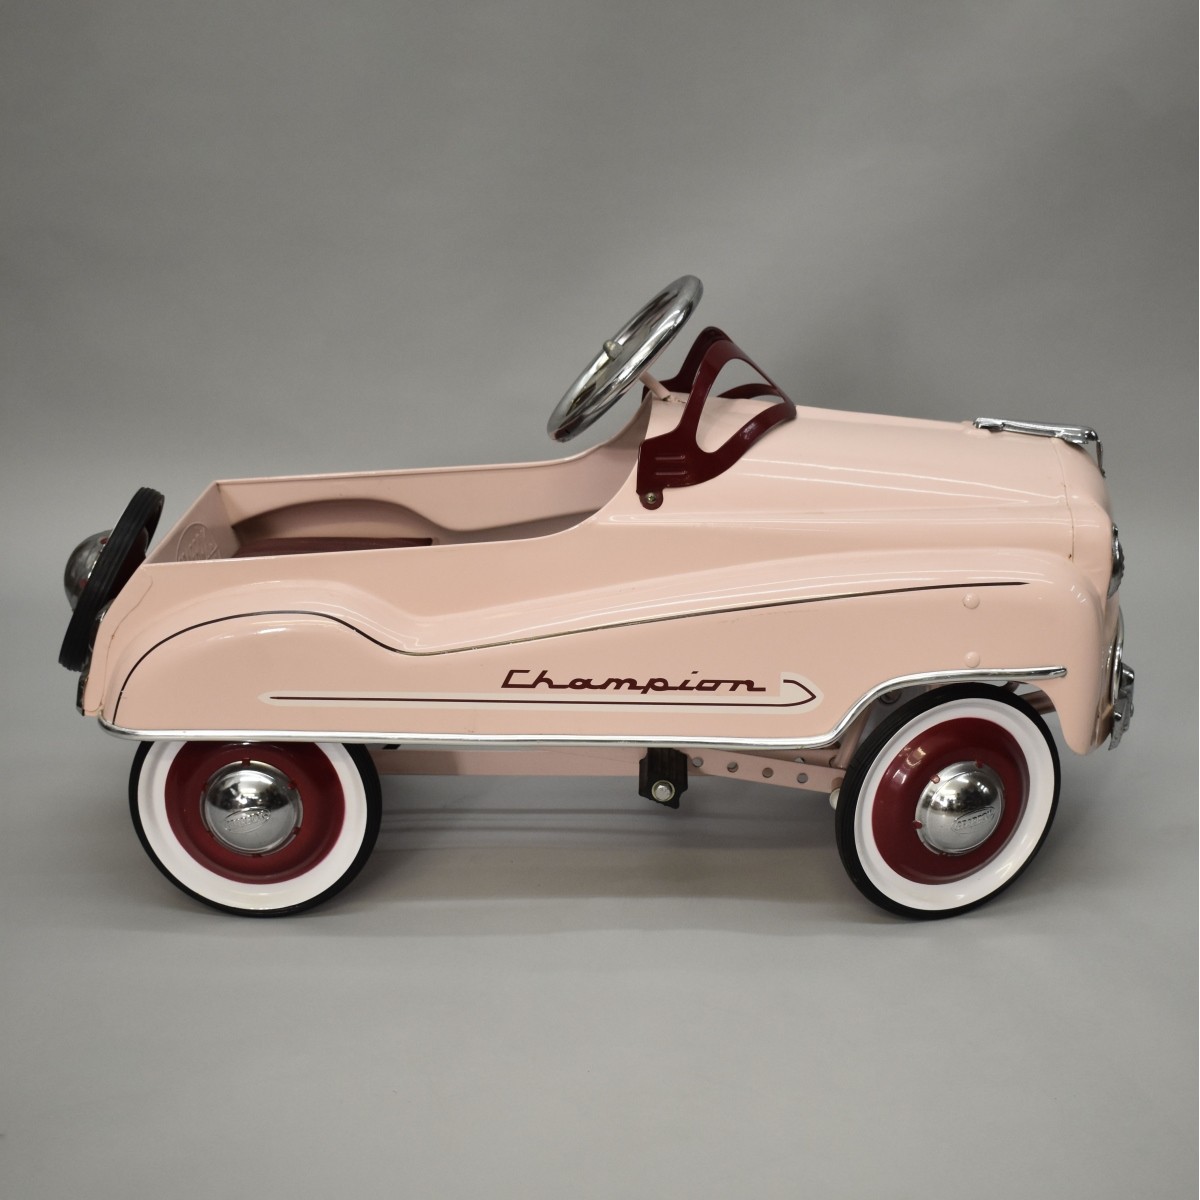 Vintage Gearbox Champion Pedal Car